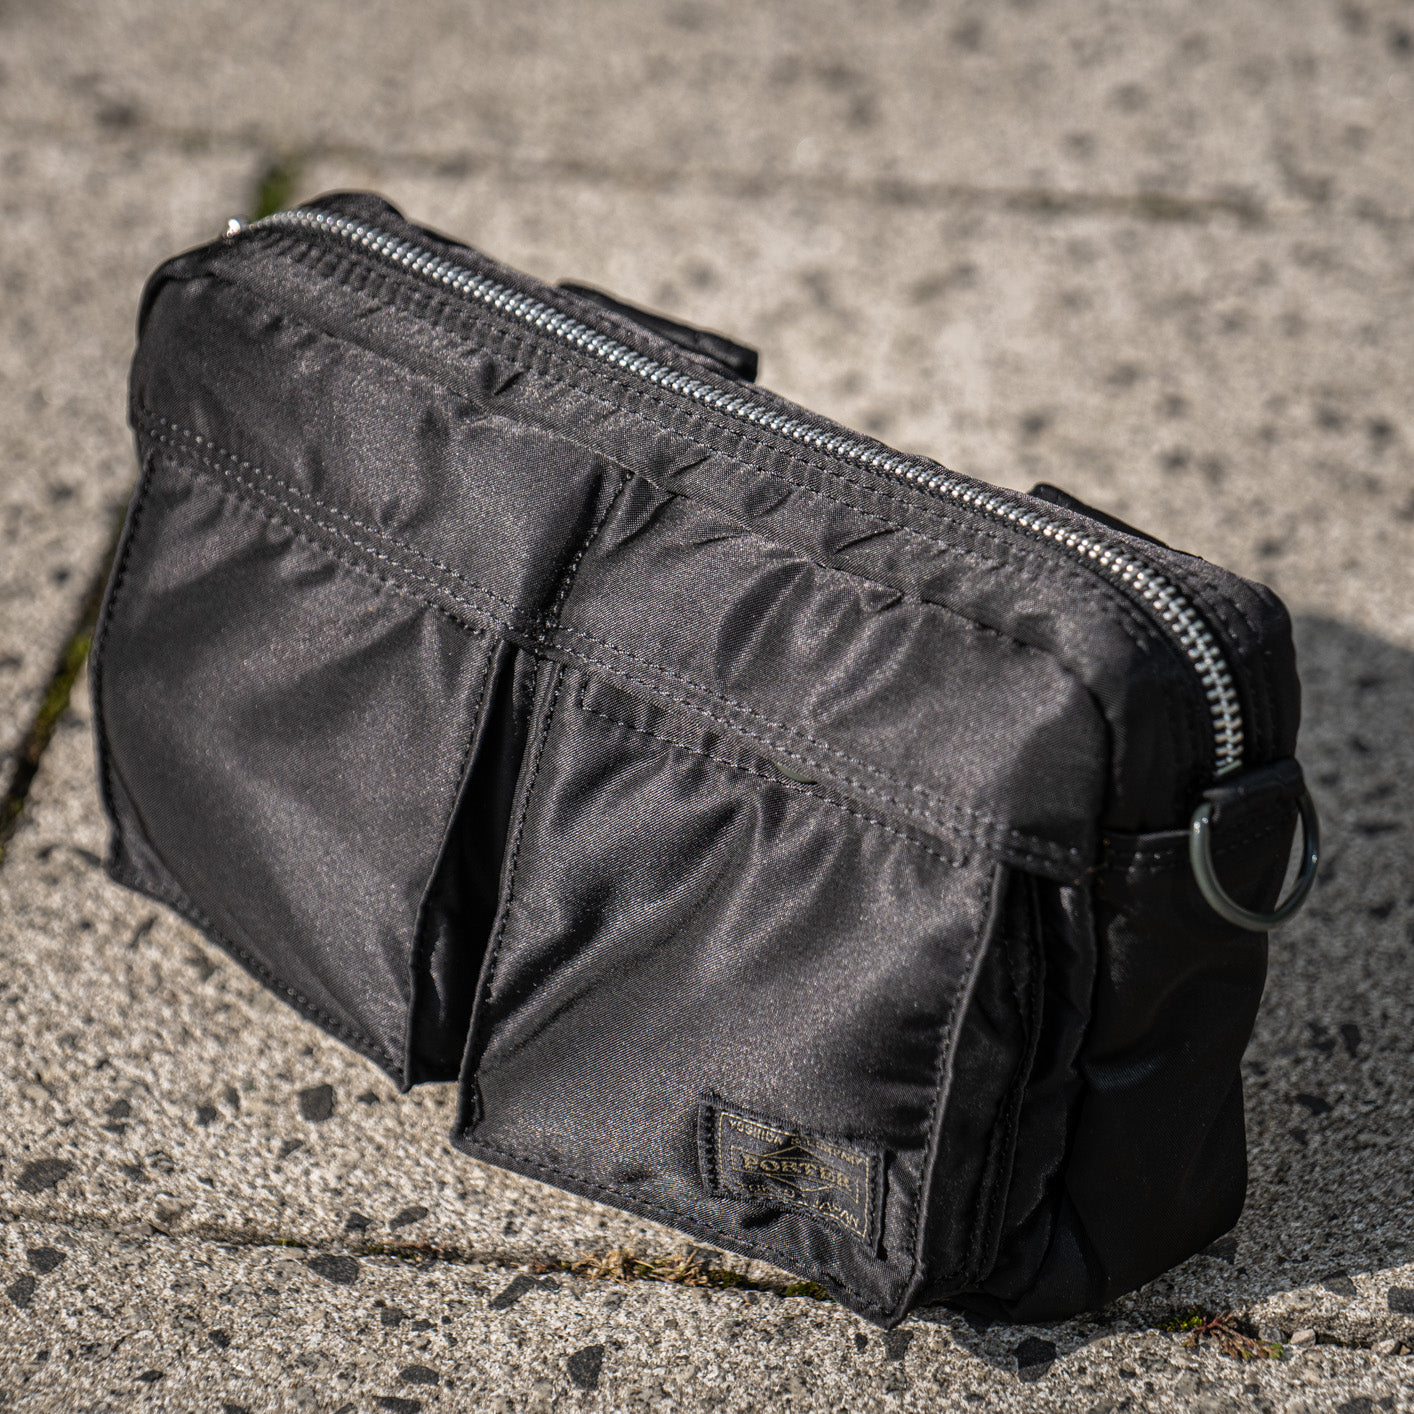 Porter Yoshida Tanker Shoulder Bag (1st Class) – Black